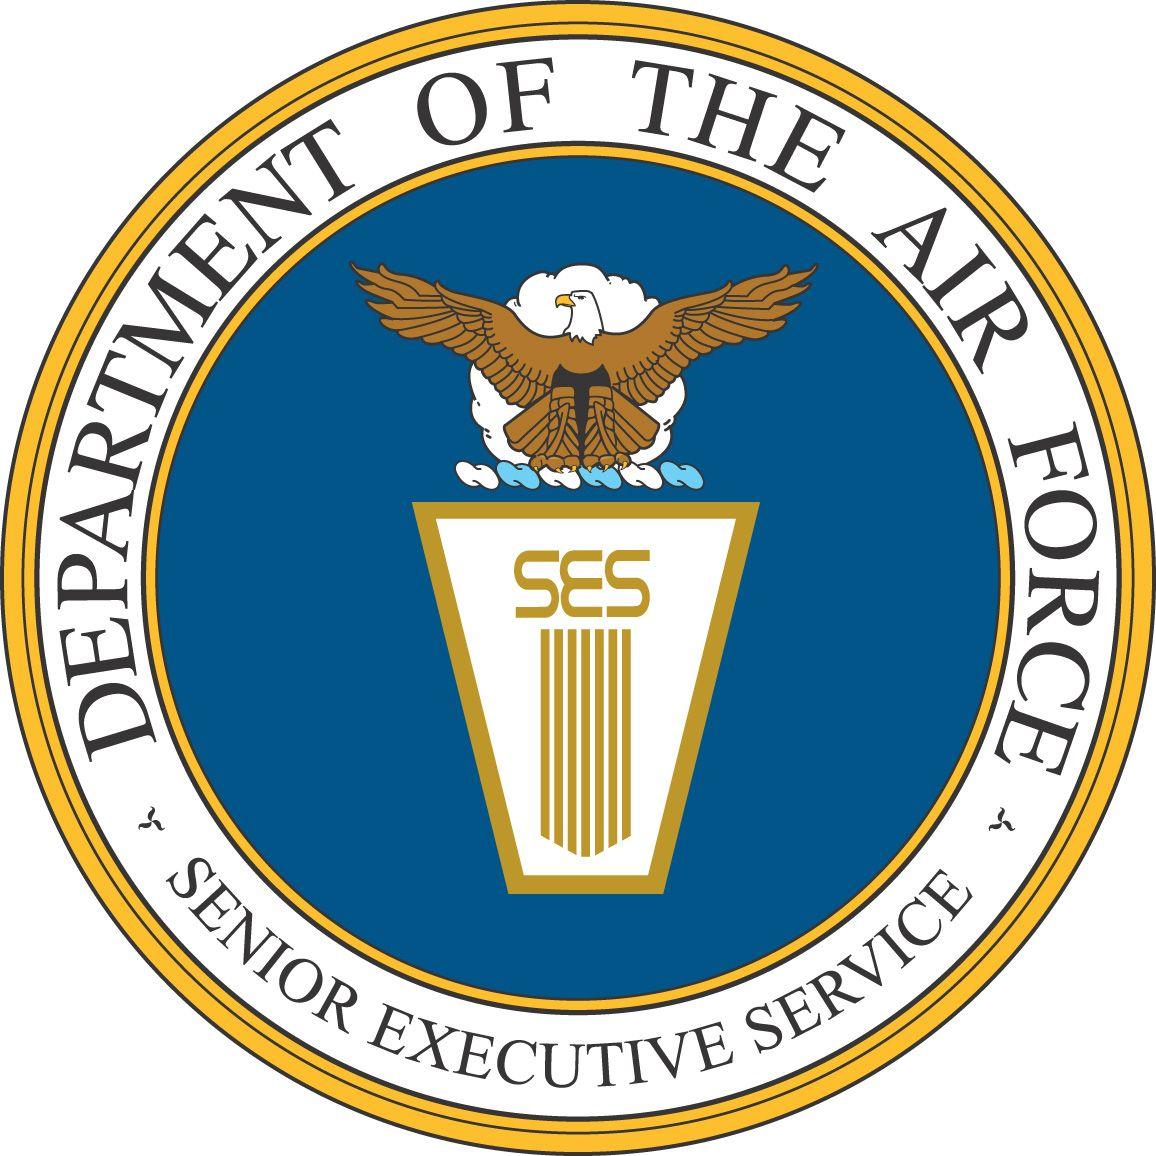 Executive Service Logo - File:Senior Executive Service, Department of the Air Force.jpg ...